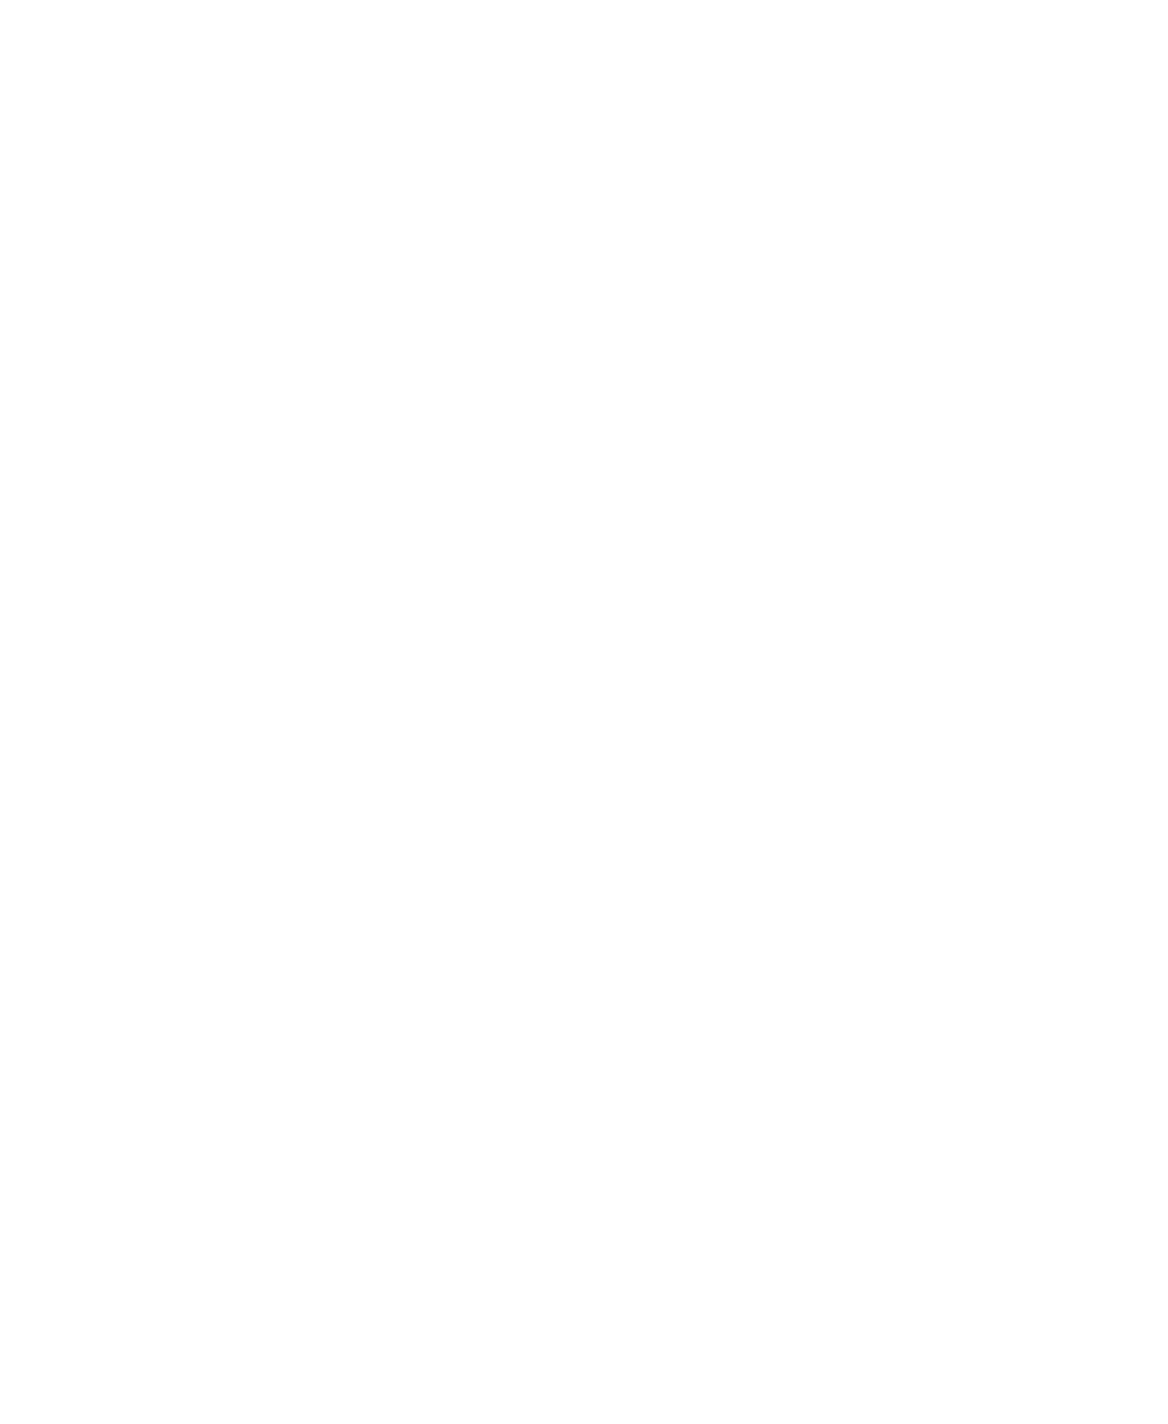 Hemptees logo - wit transp